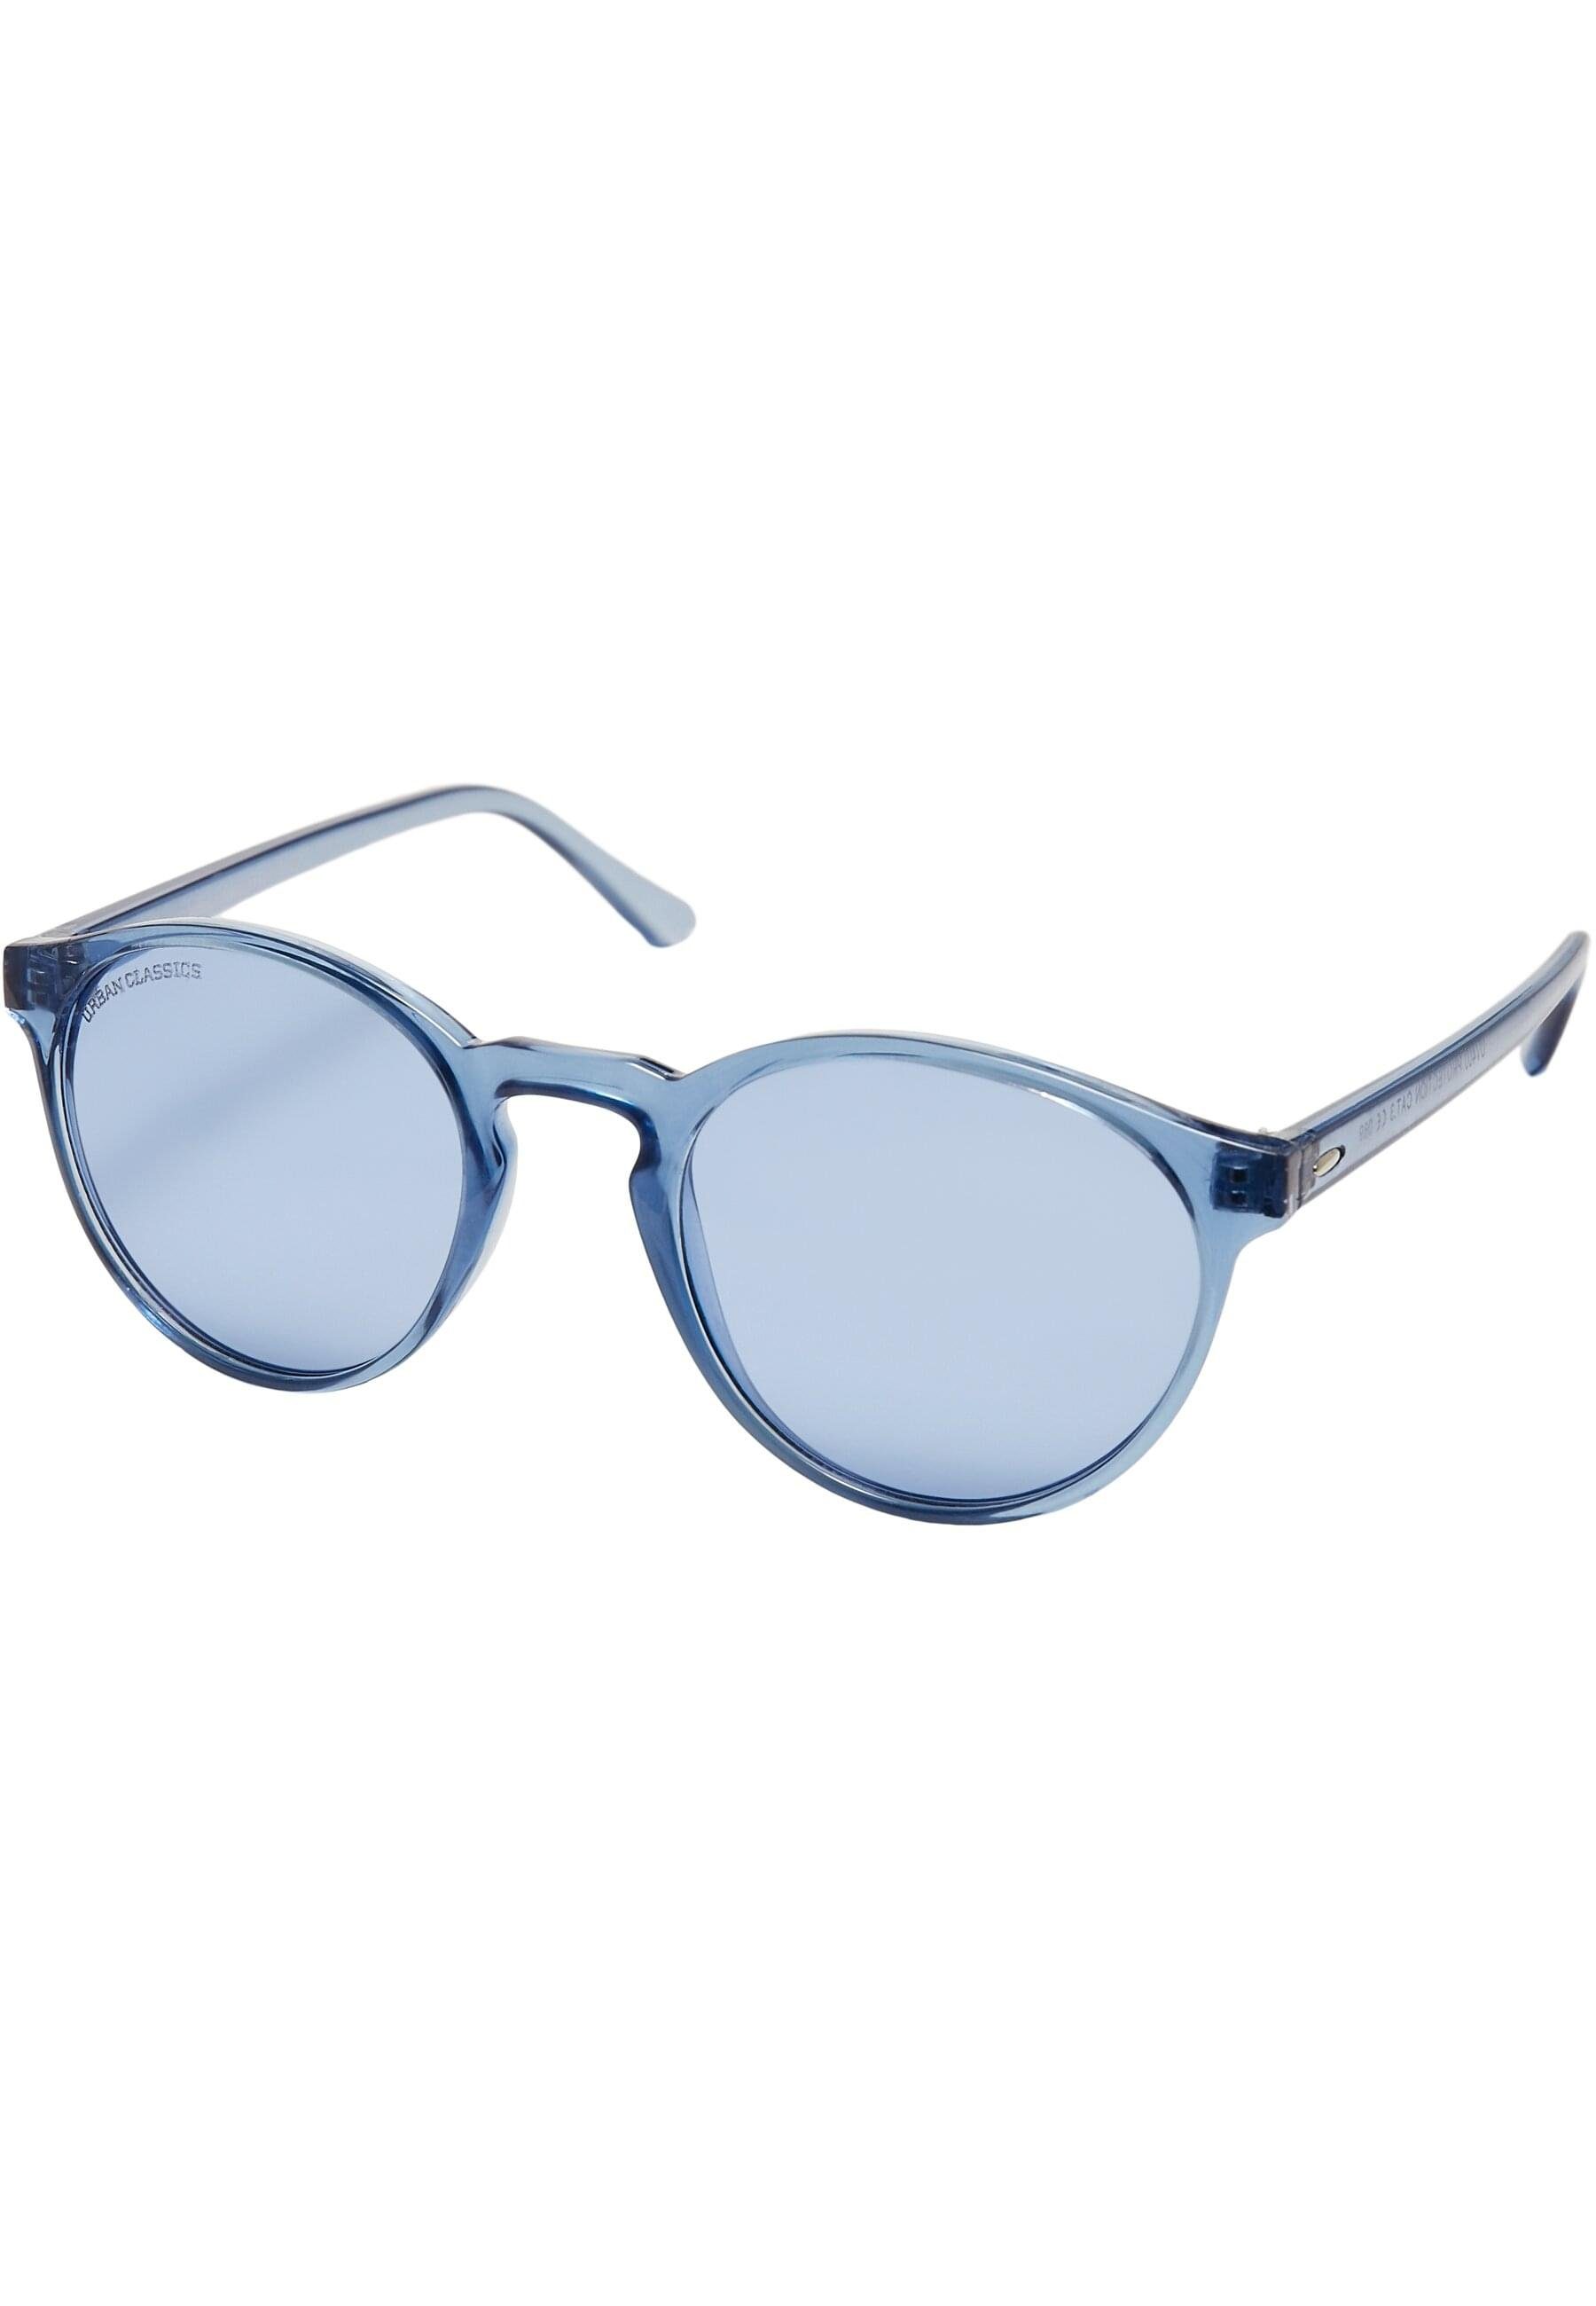 Cypress Unisex URBAN Sonnenbrille black+brown+blue Sunglasses CLASSICS 3-Pack